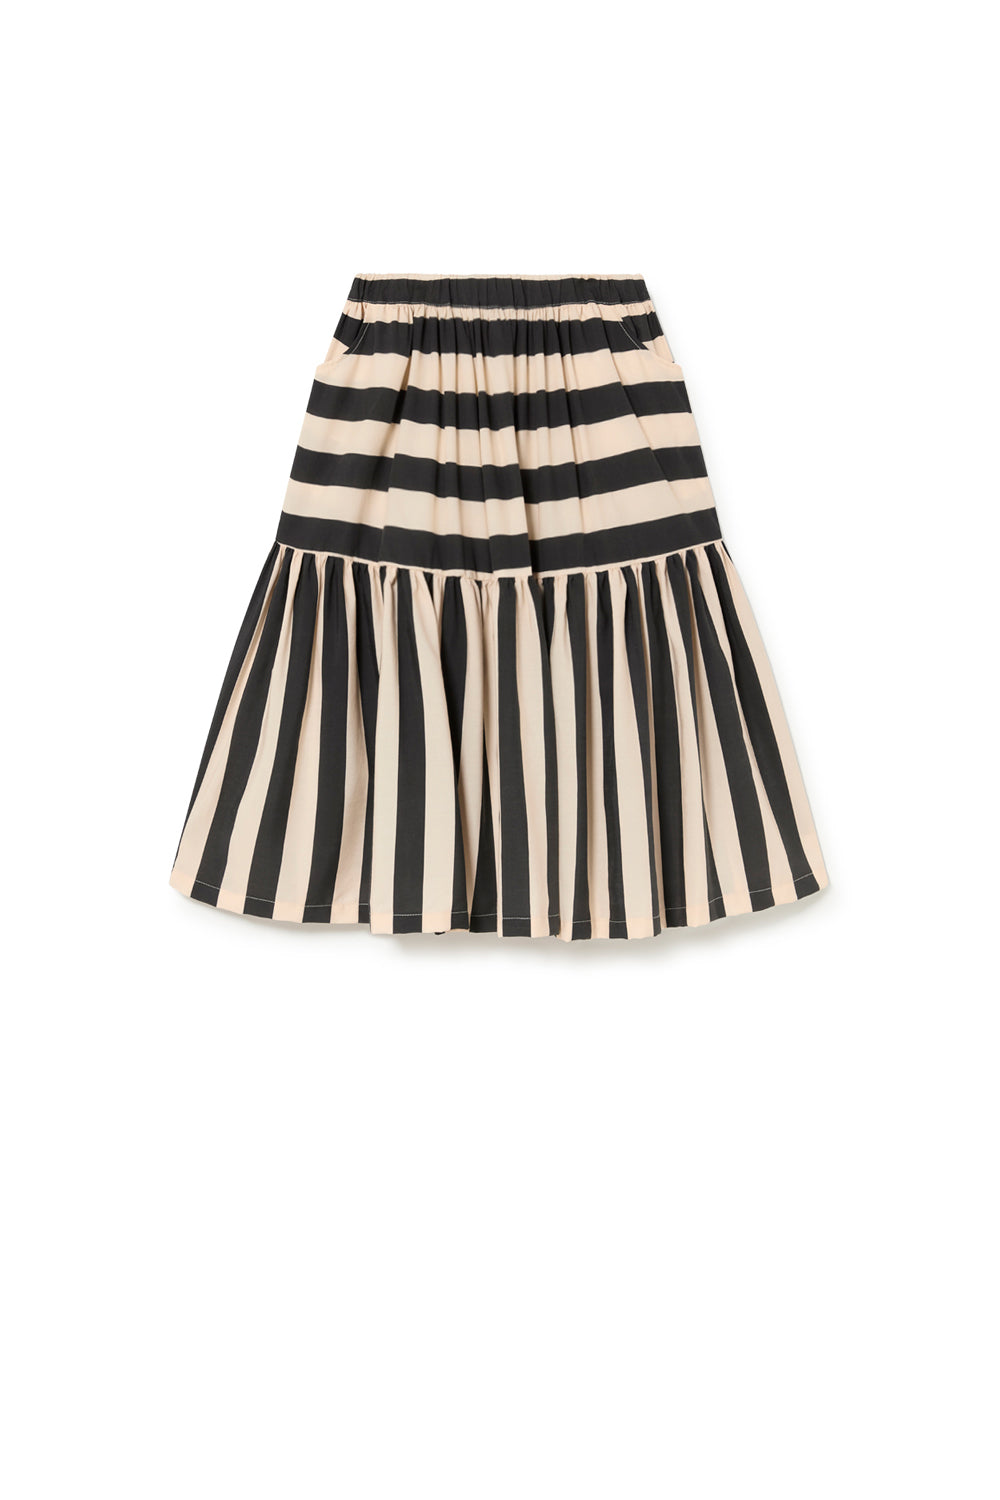 Iconic Lines Skirt-Cream/Black